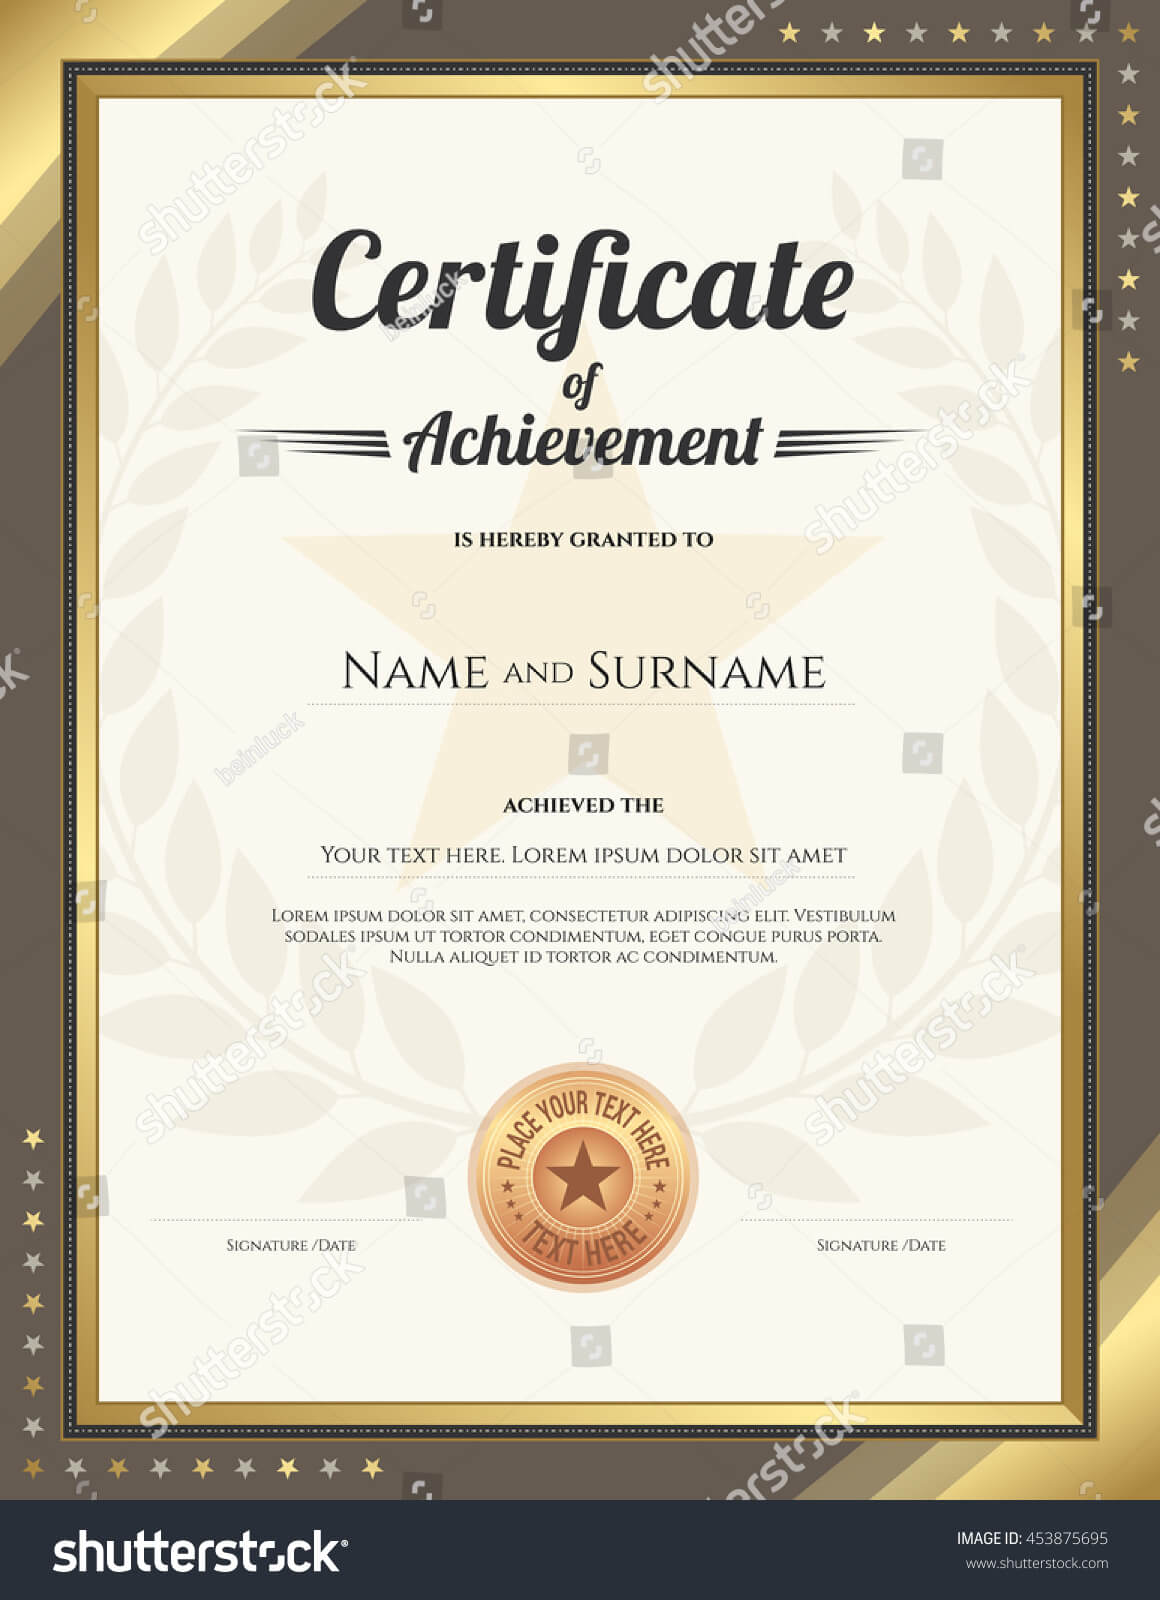 Portrait Certificate Achievement Template Gold Border Regarding Star Of The Week Certificate Template